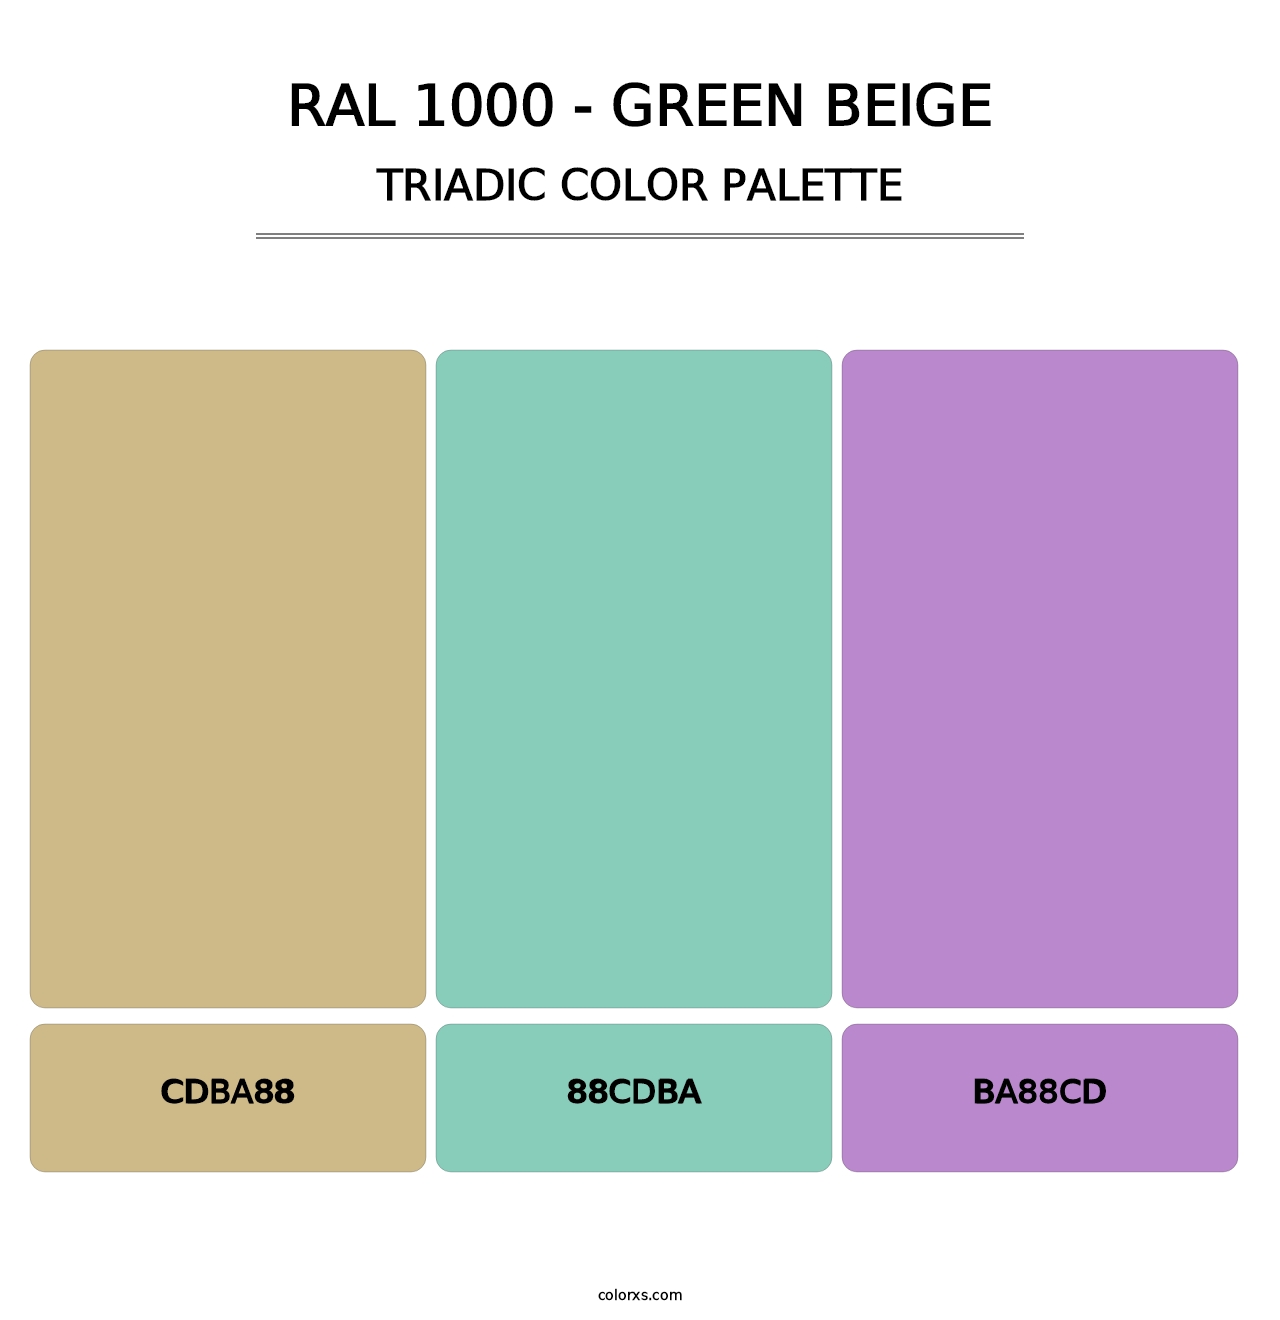 RAL 1000 - Green Beige - Triadic Color Palette